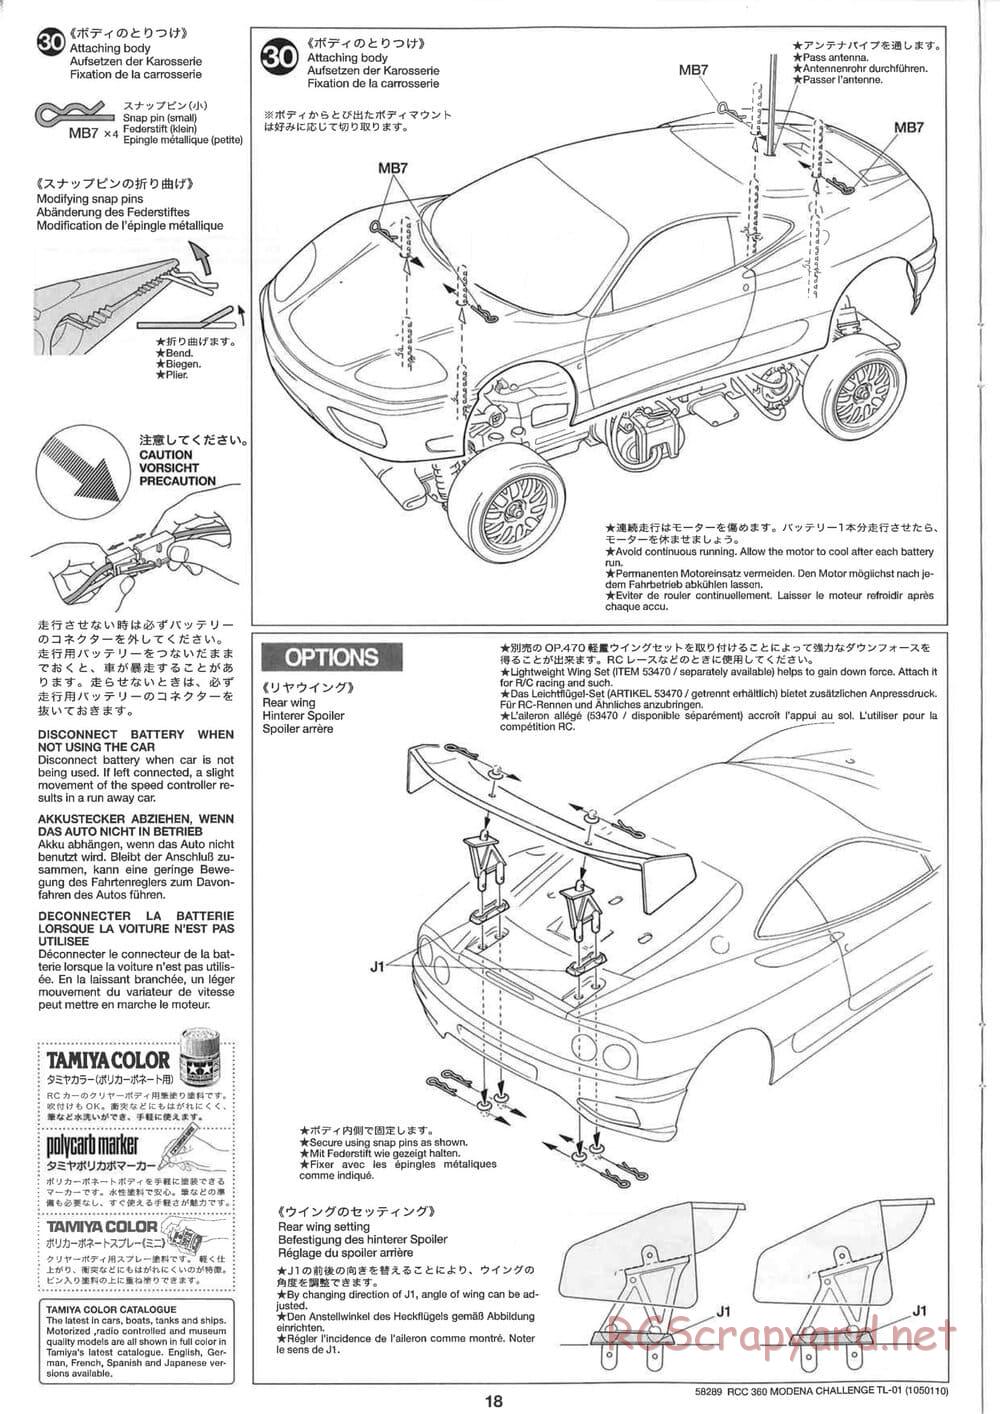 Tamiya - Ferrari 360 Modena Challenge - TL-01 Chassis - Manual - Page 18